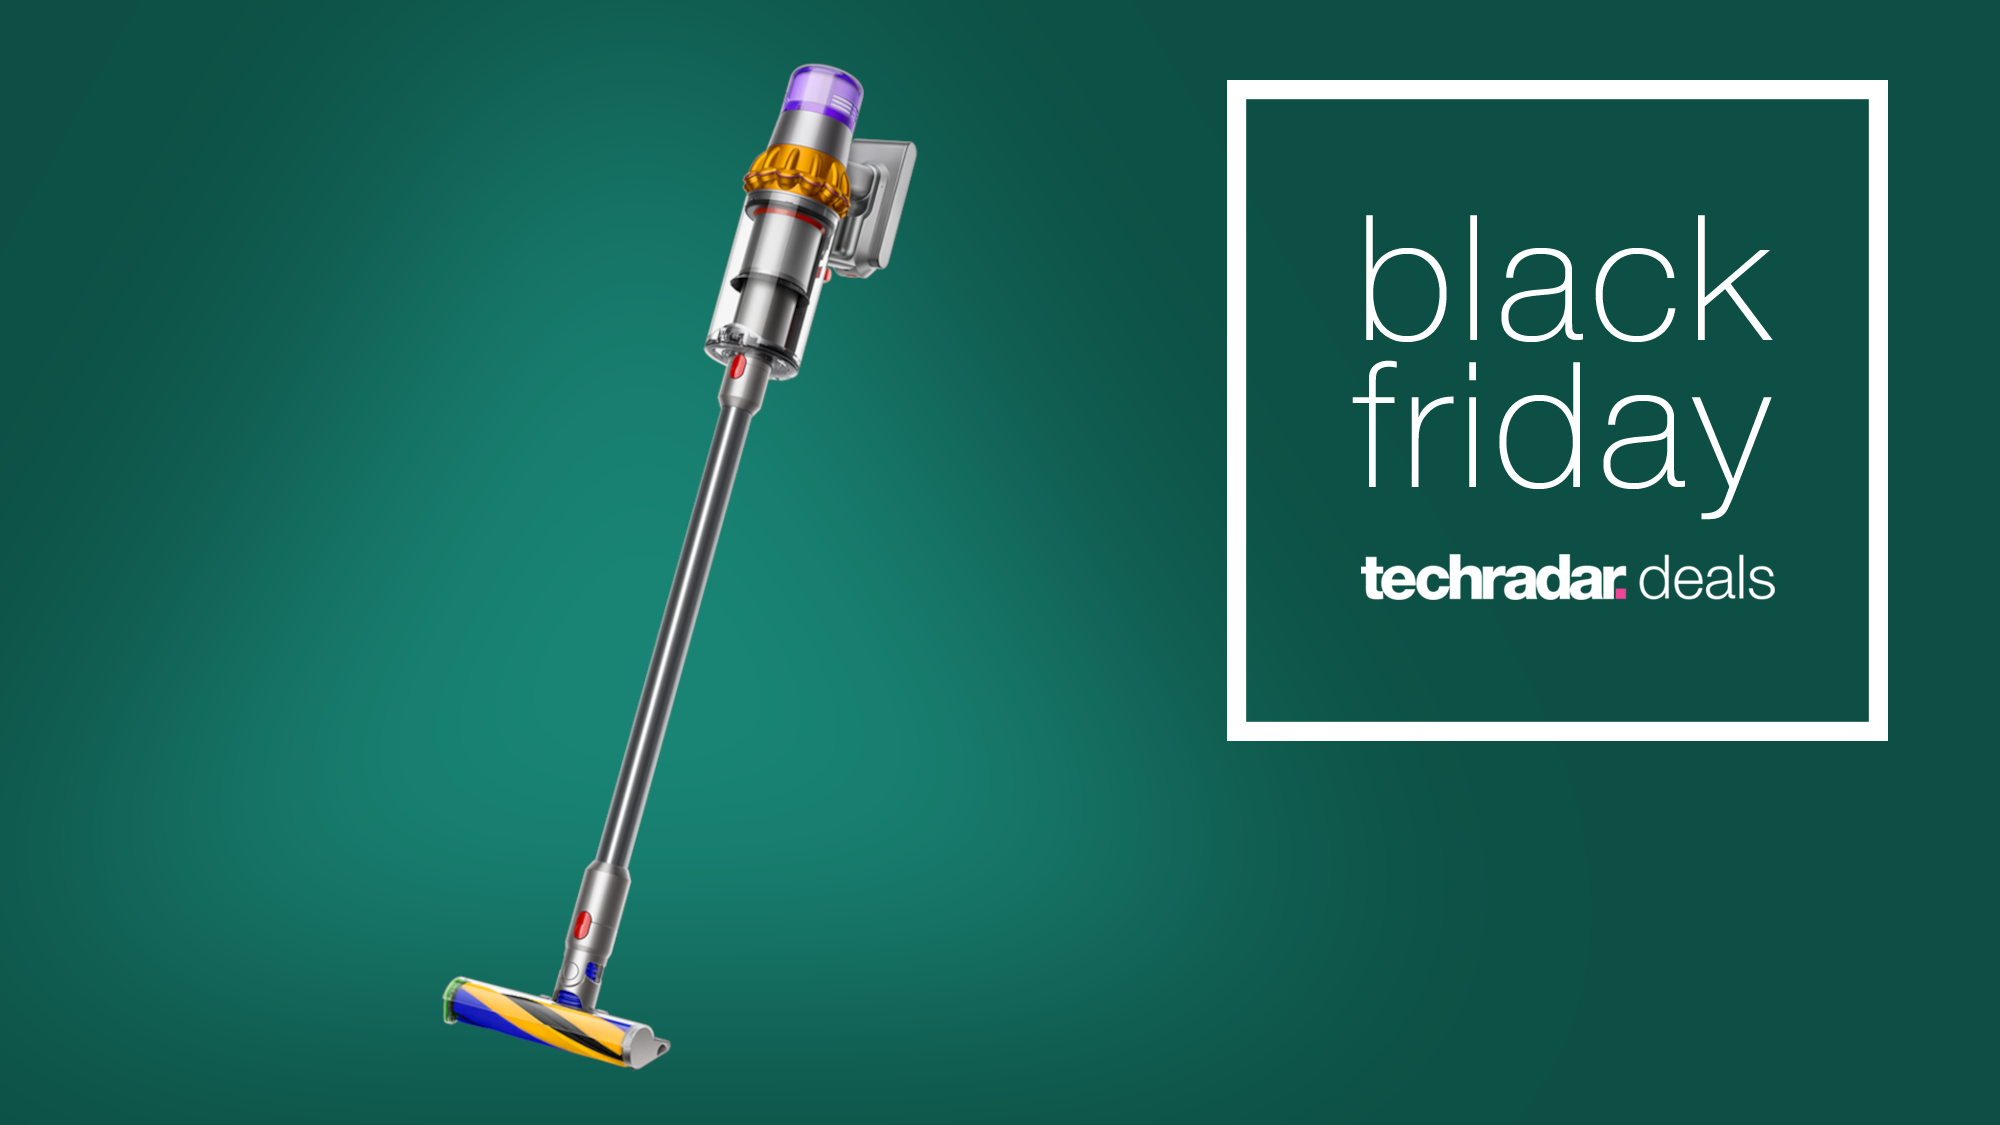 Dyson V15 Black Friday deals save on a topnotch cordless vacuum